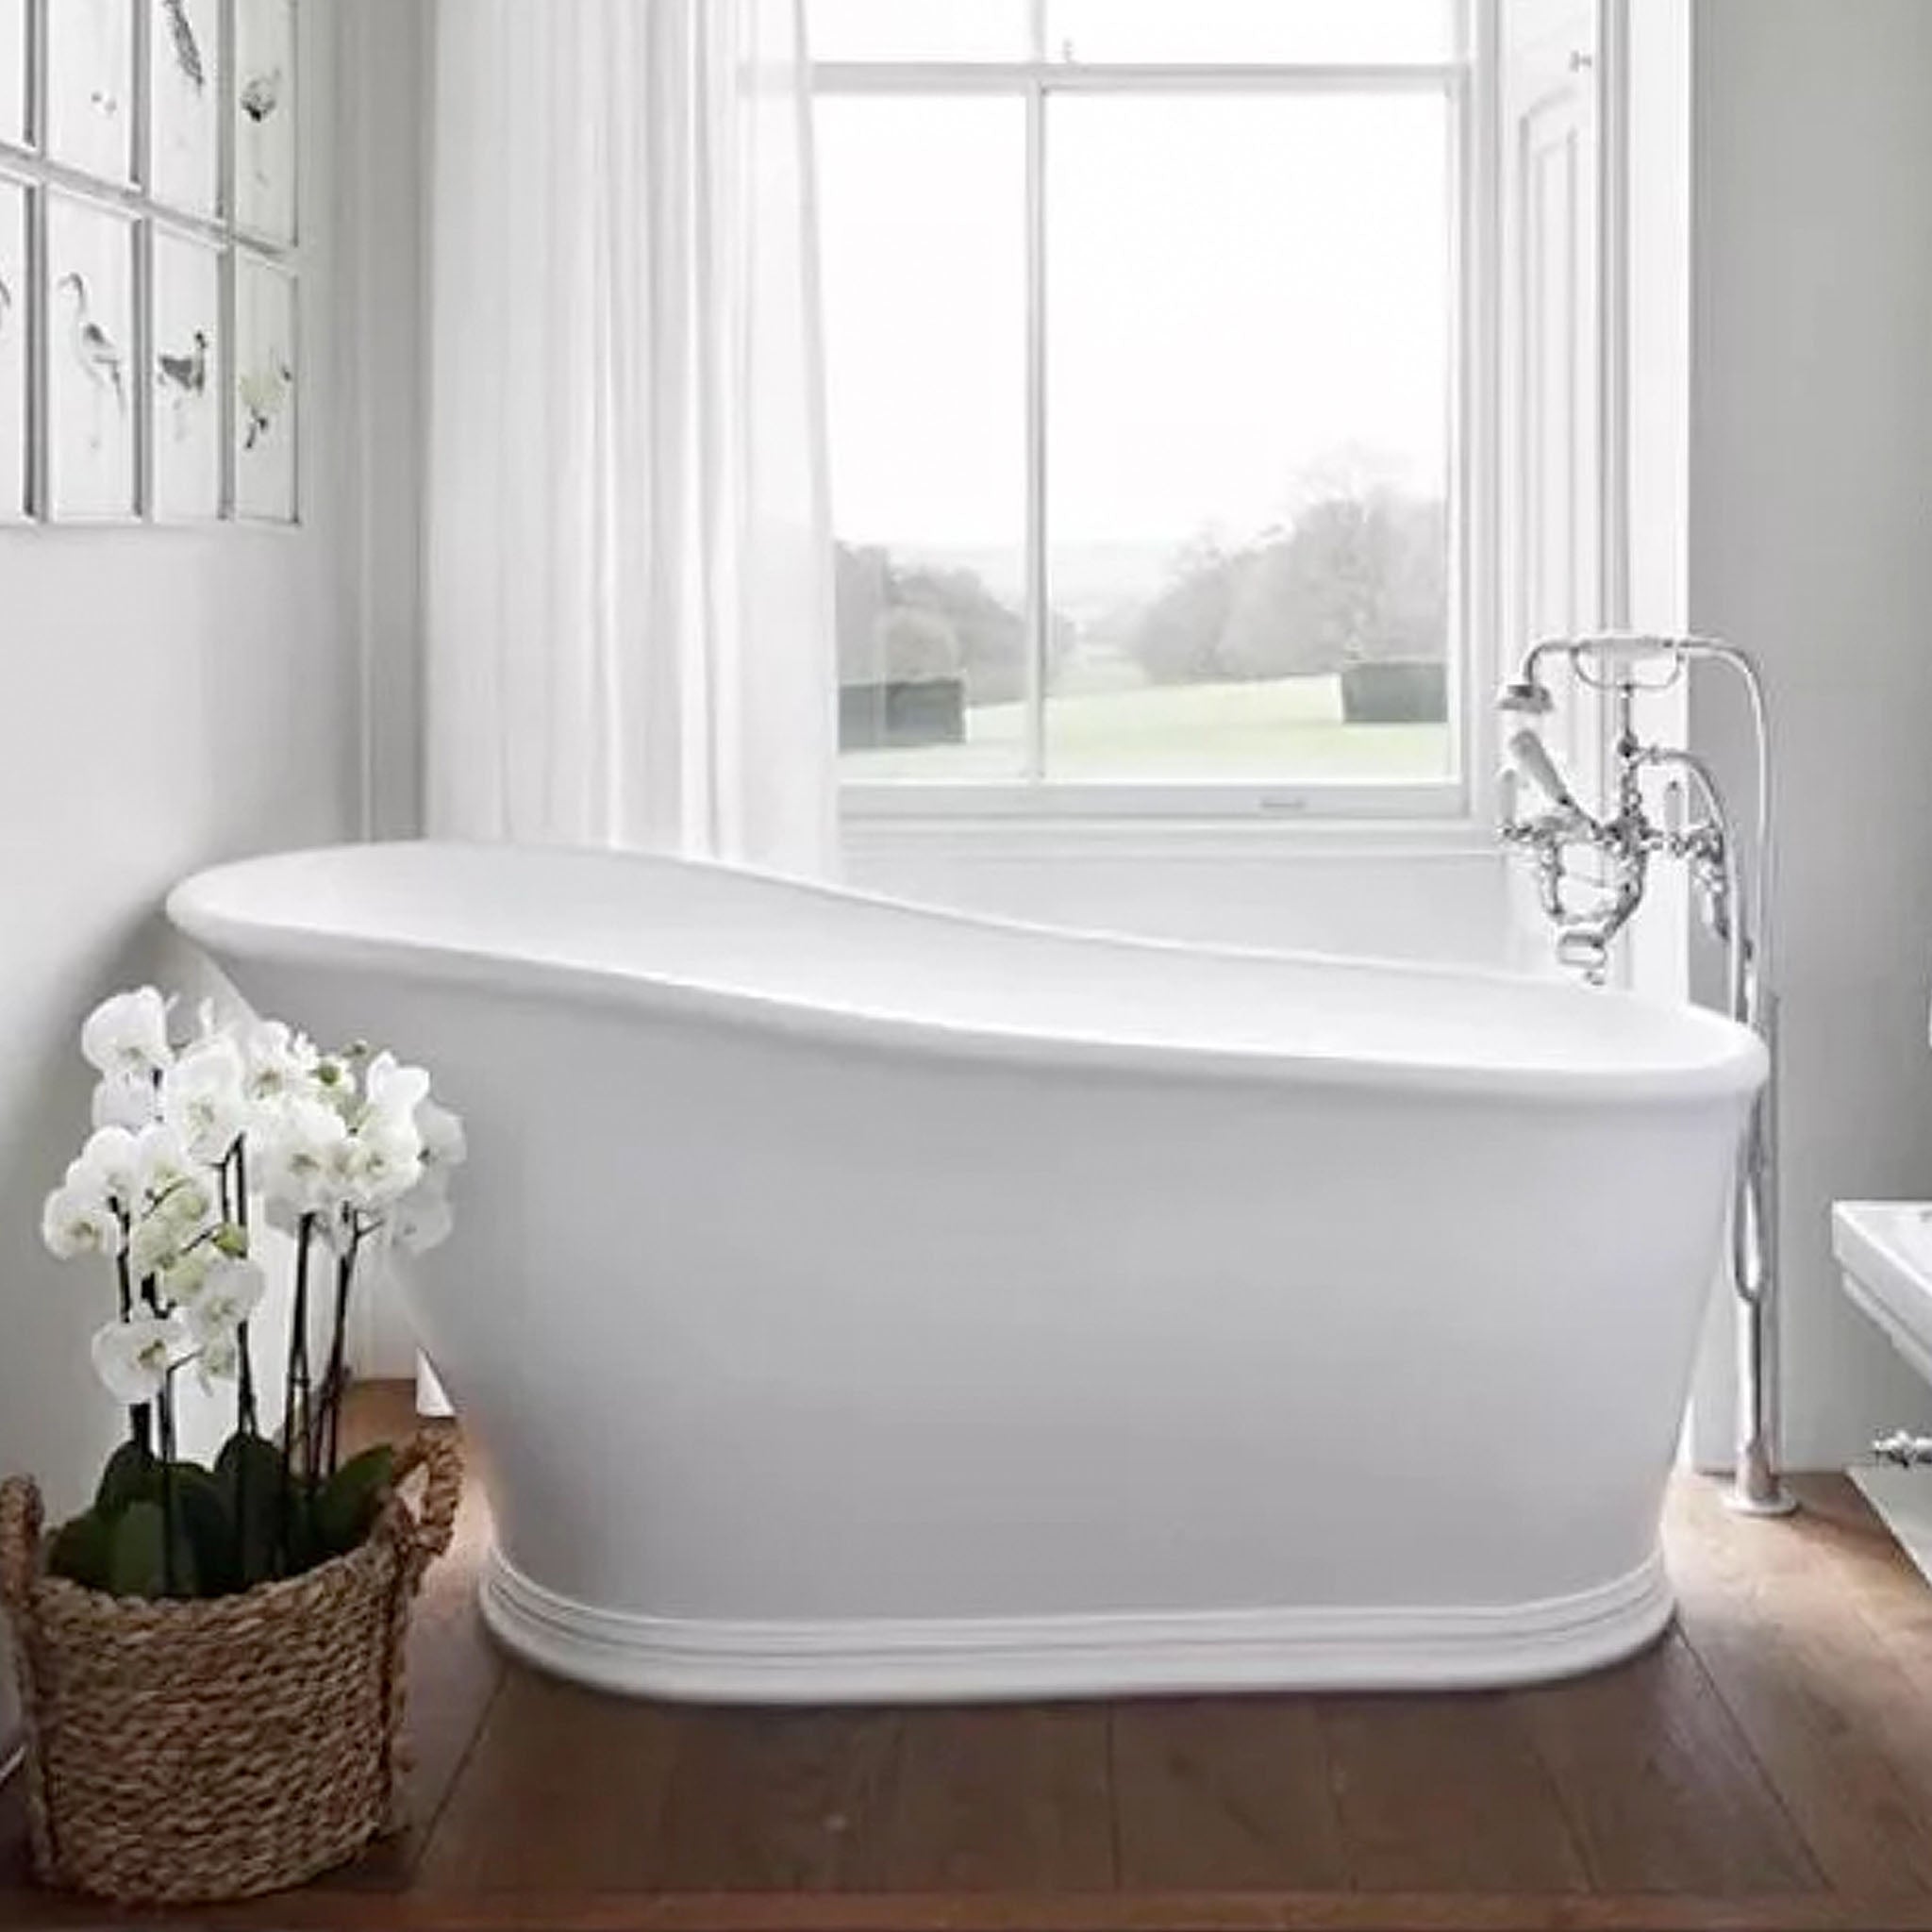 BC Designs Cian Slipper Single Ended Bath 1590 x 785mm